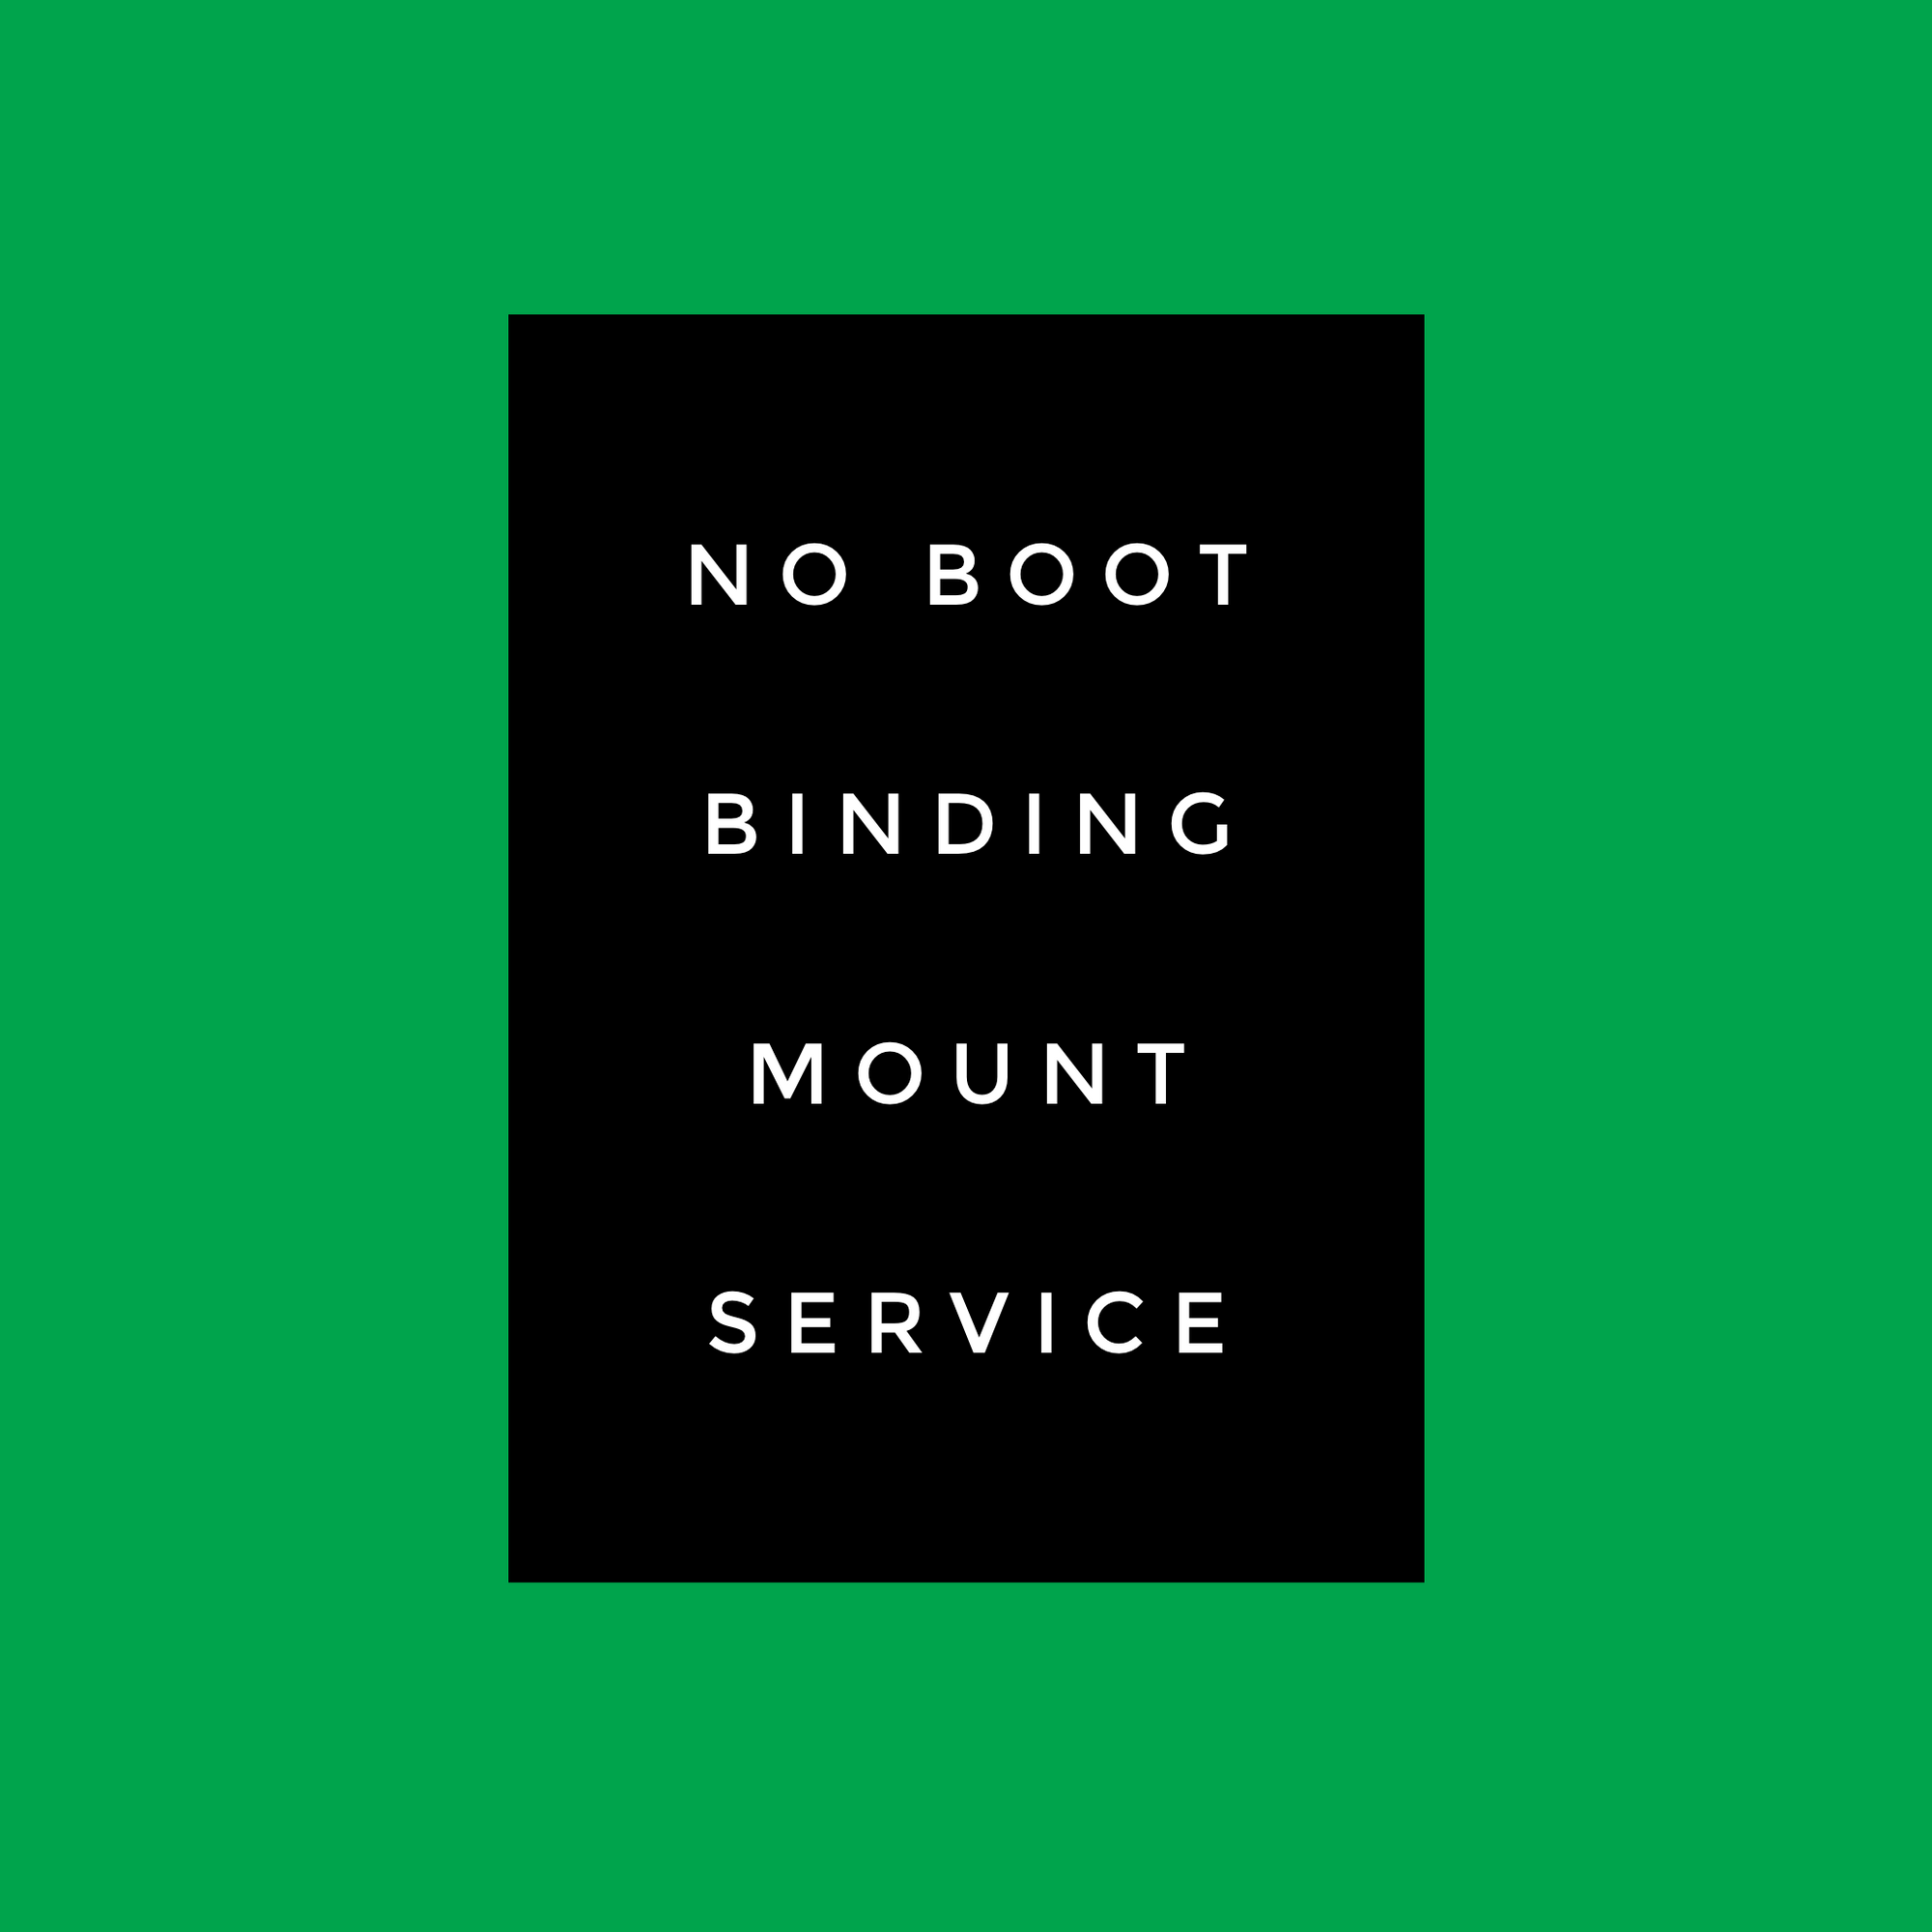 No boot binding mount service